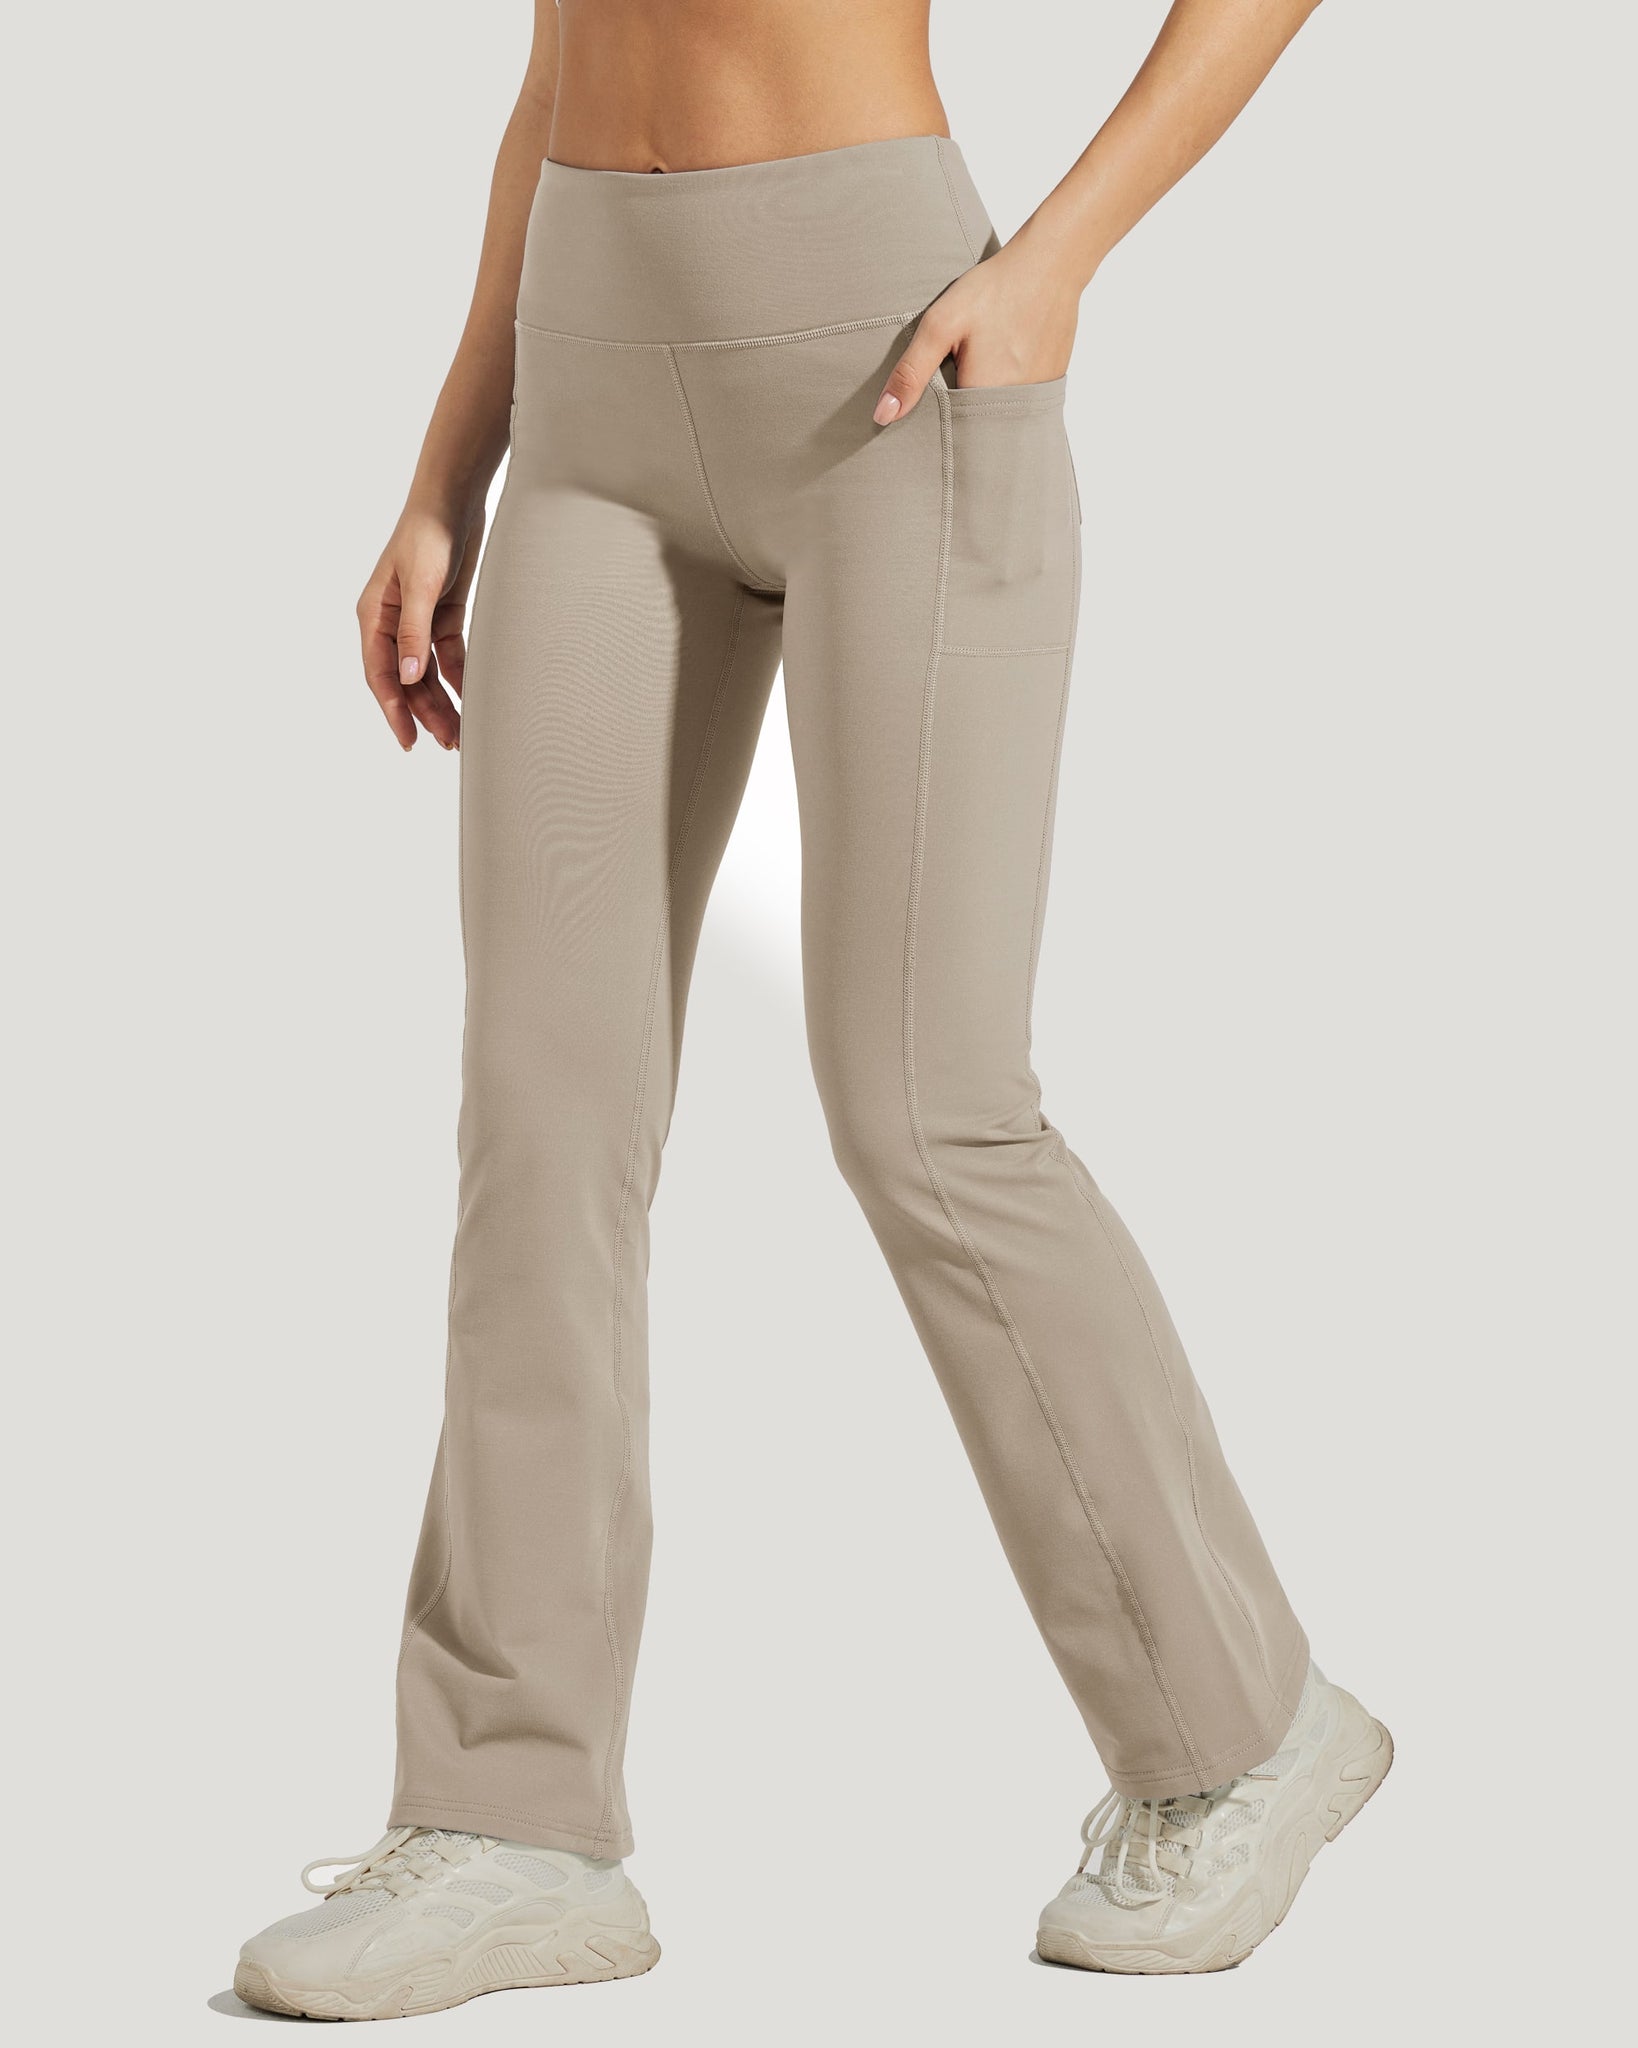 Women's Fleece Lined Bootcut Yoga Pants_Khaki_model4